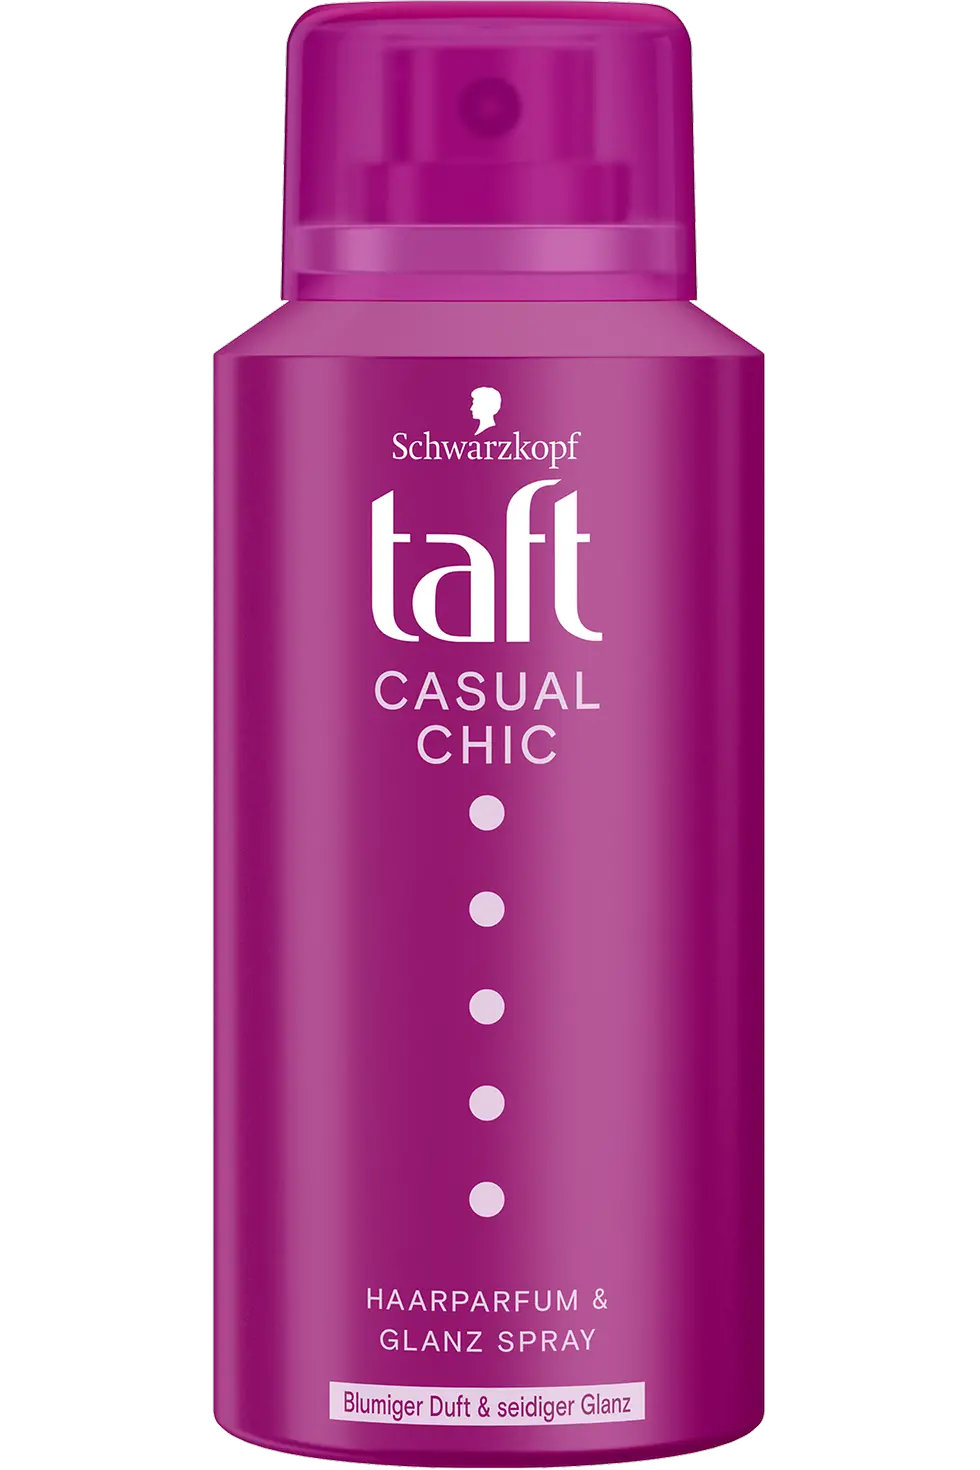 Taft Casual Chic Haarparfum & Glanz Spray